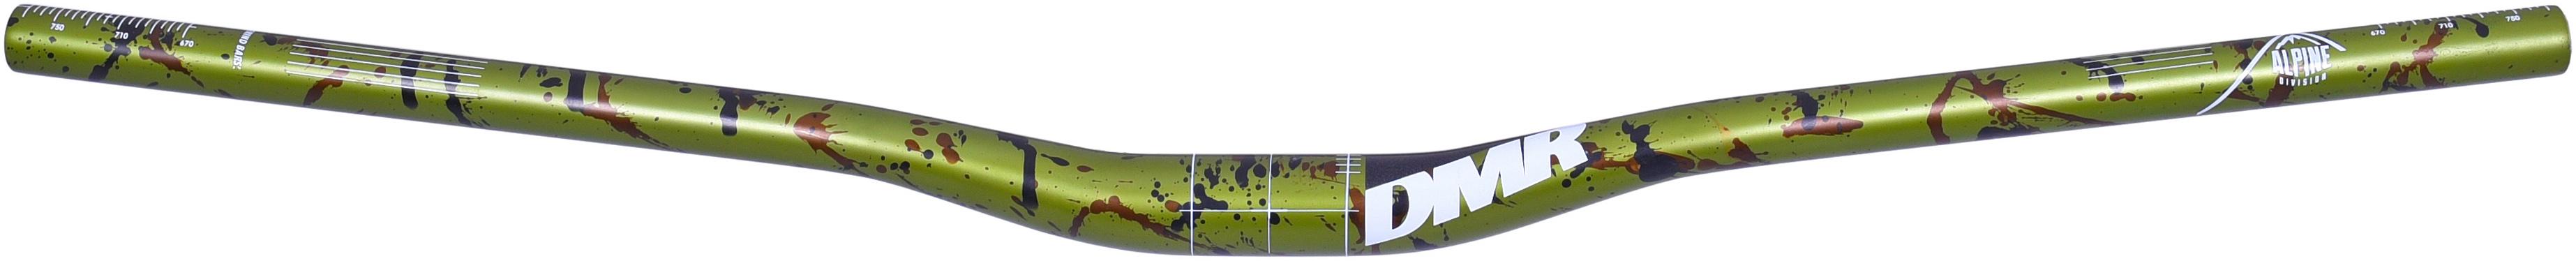 Dmr Wingbar Limited Edition Mtb Handlebar  Liquid Camo Green